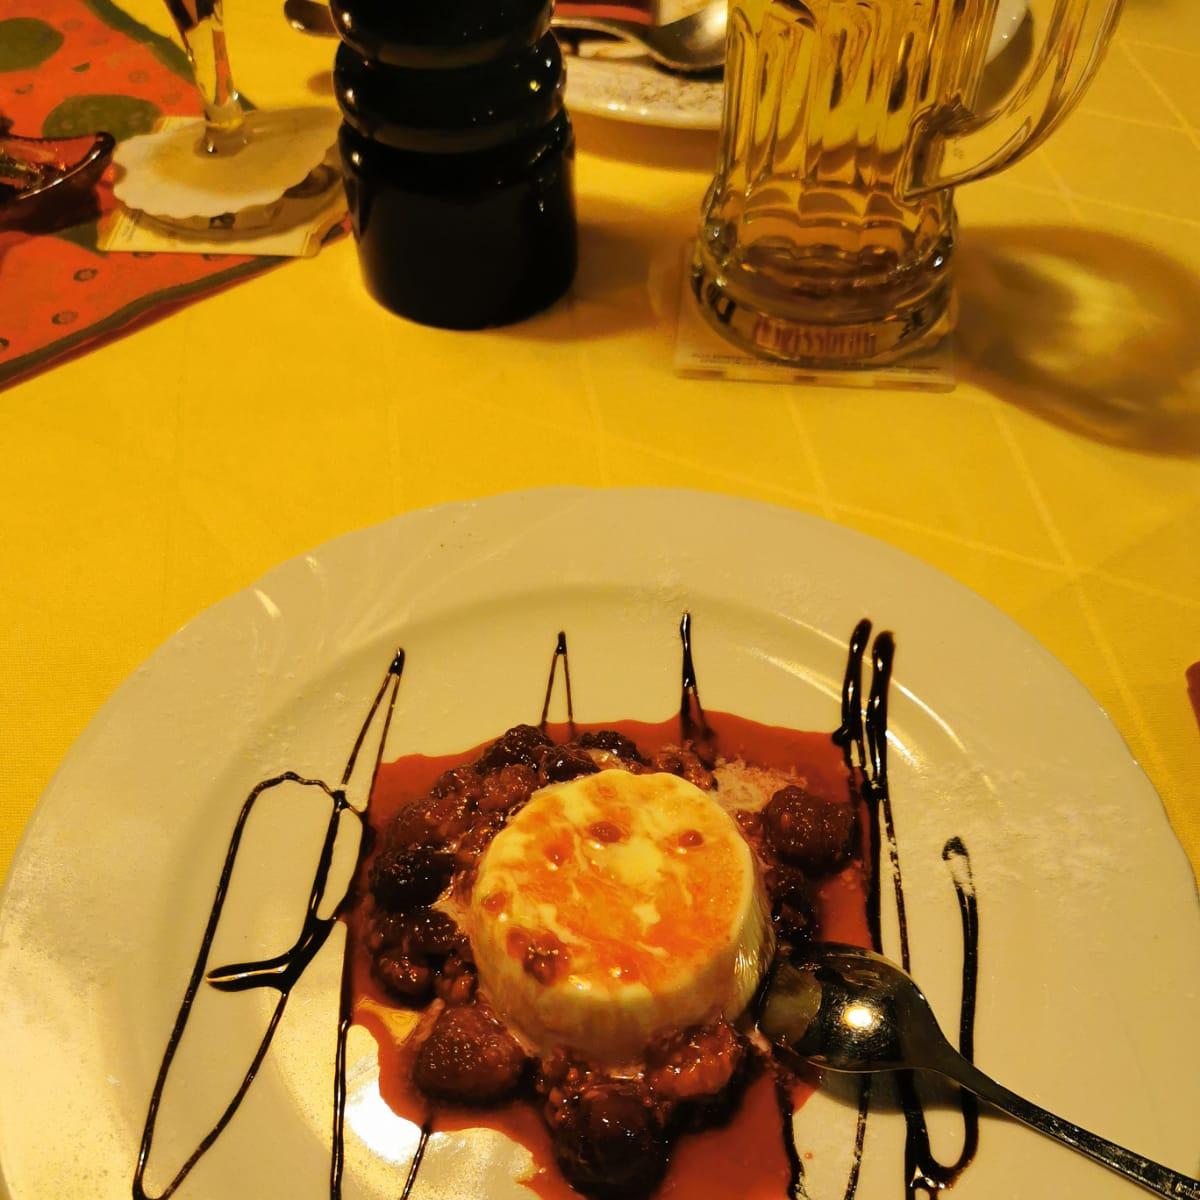 Restaurant "Ristorante Milano" in Homberg (Ohm)